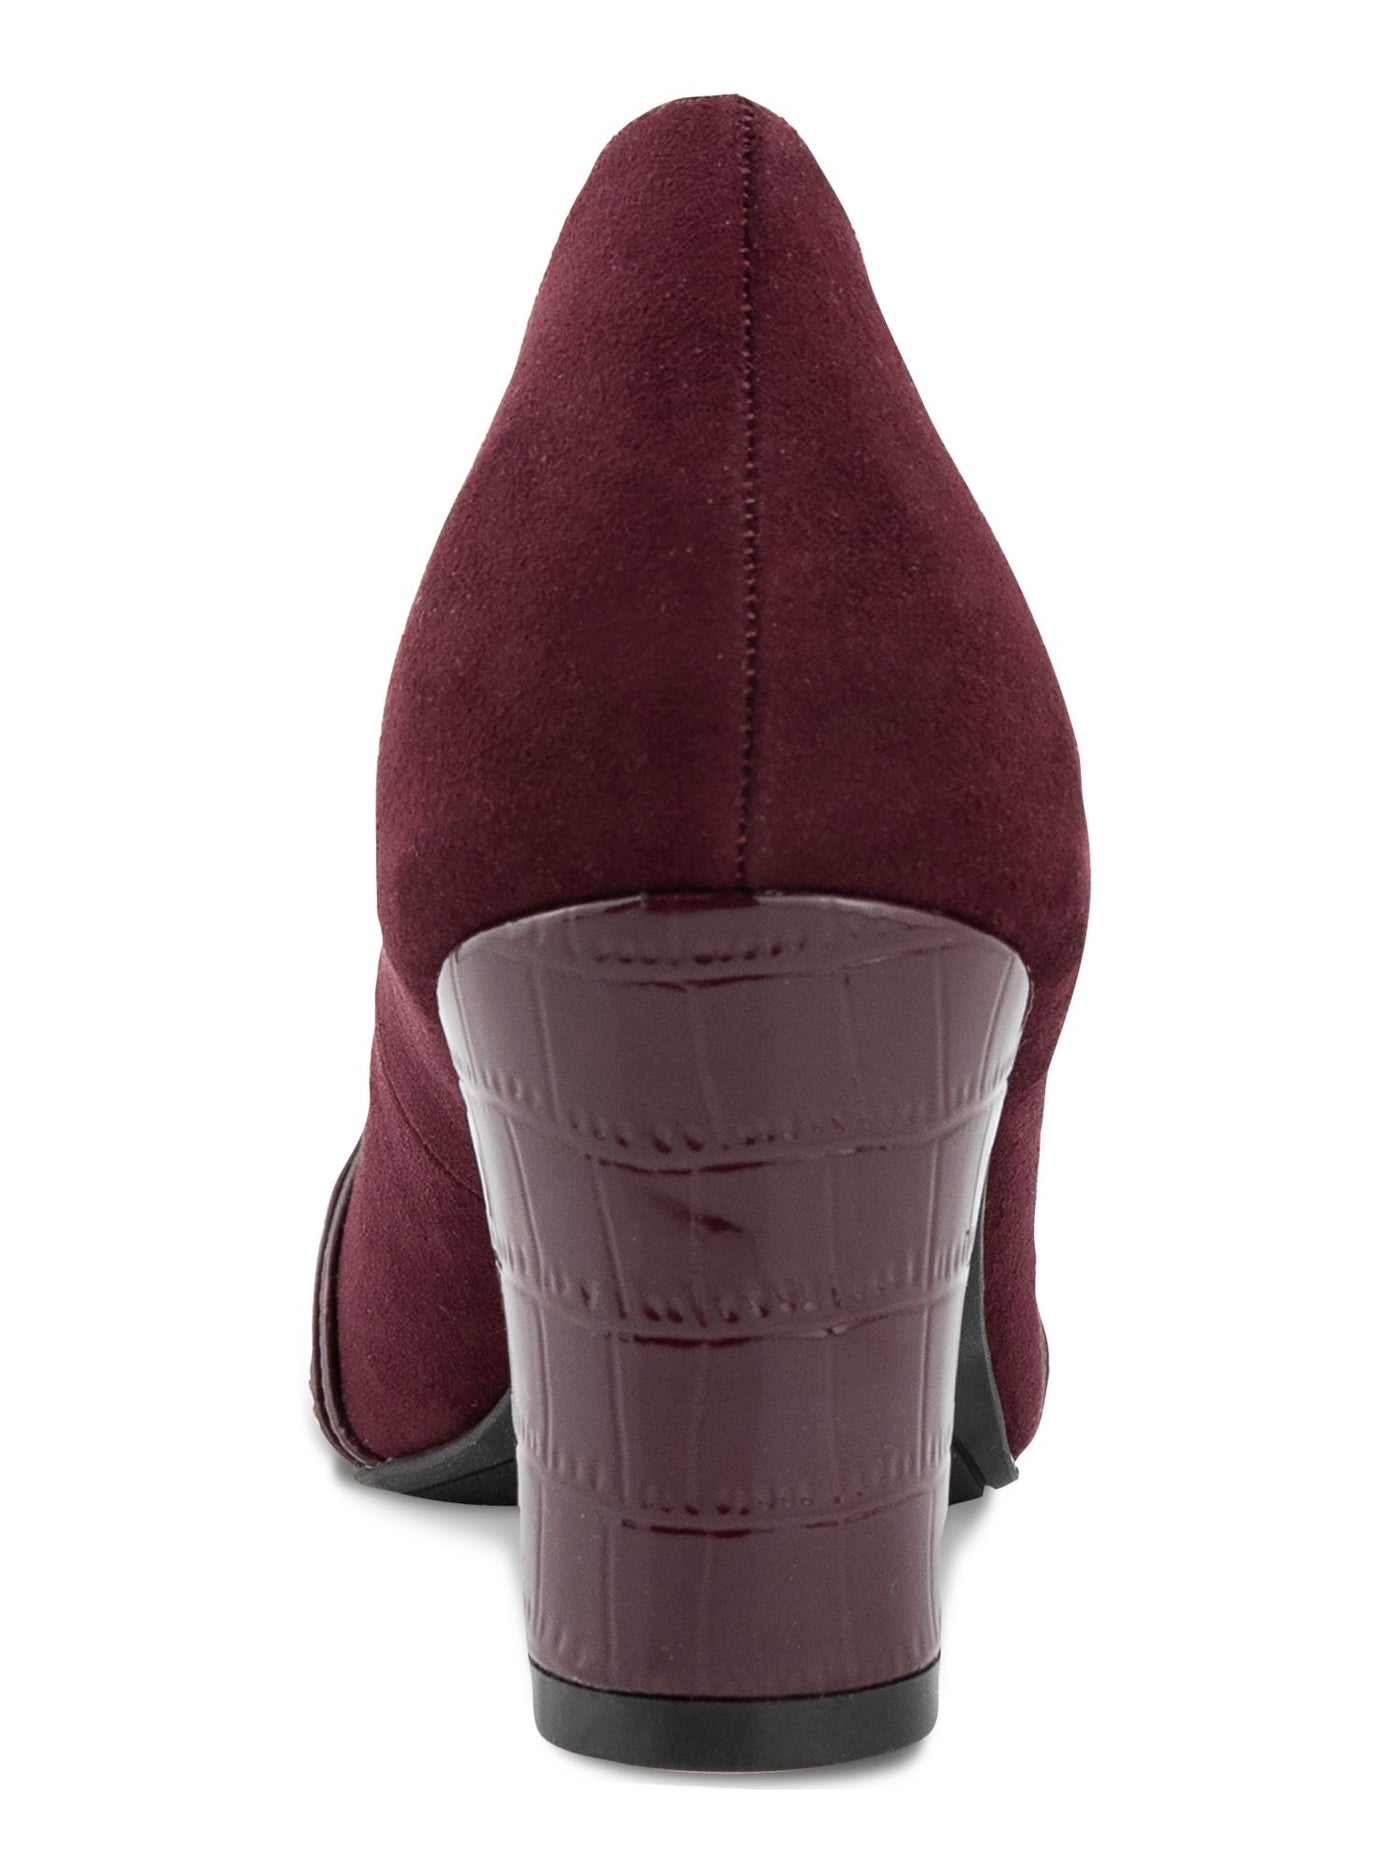 KAREN SCOTT Womens Burgundy Cushioned Penzey Almond Toe Block Heel Slip On Dress Pumps Shoes 5 M